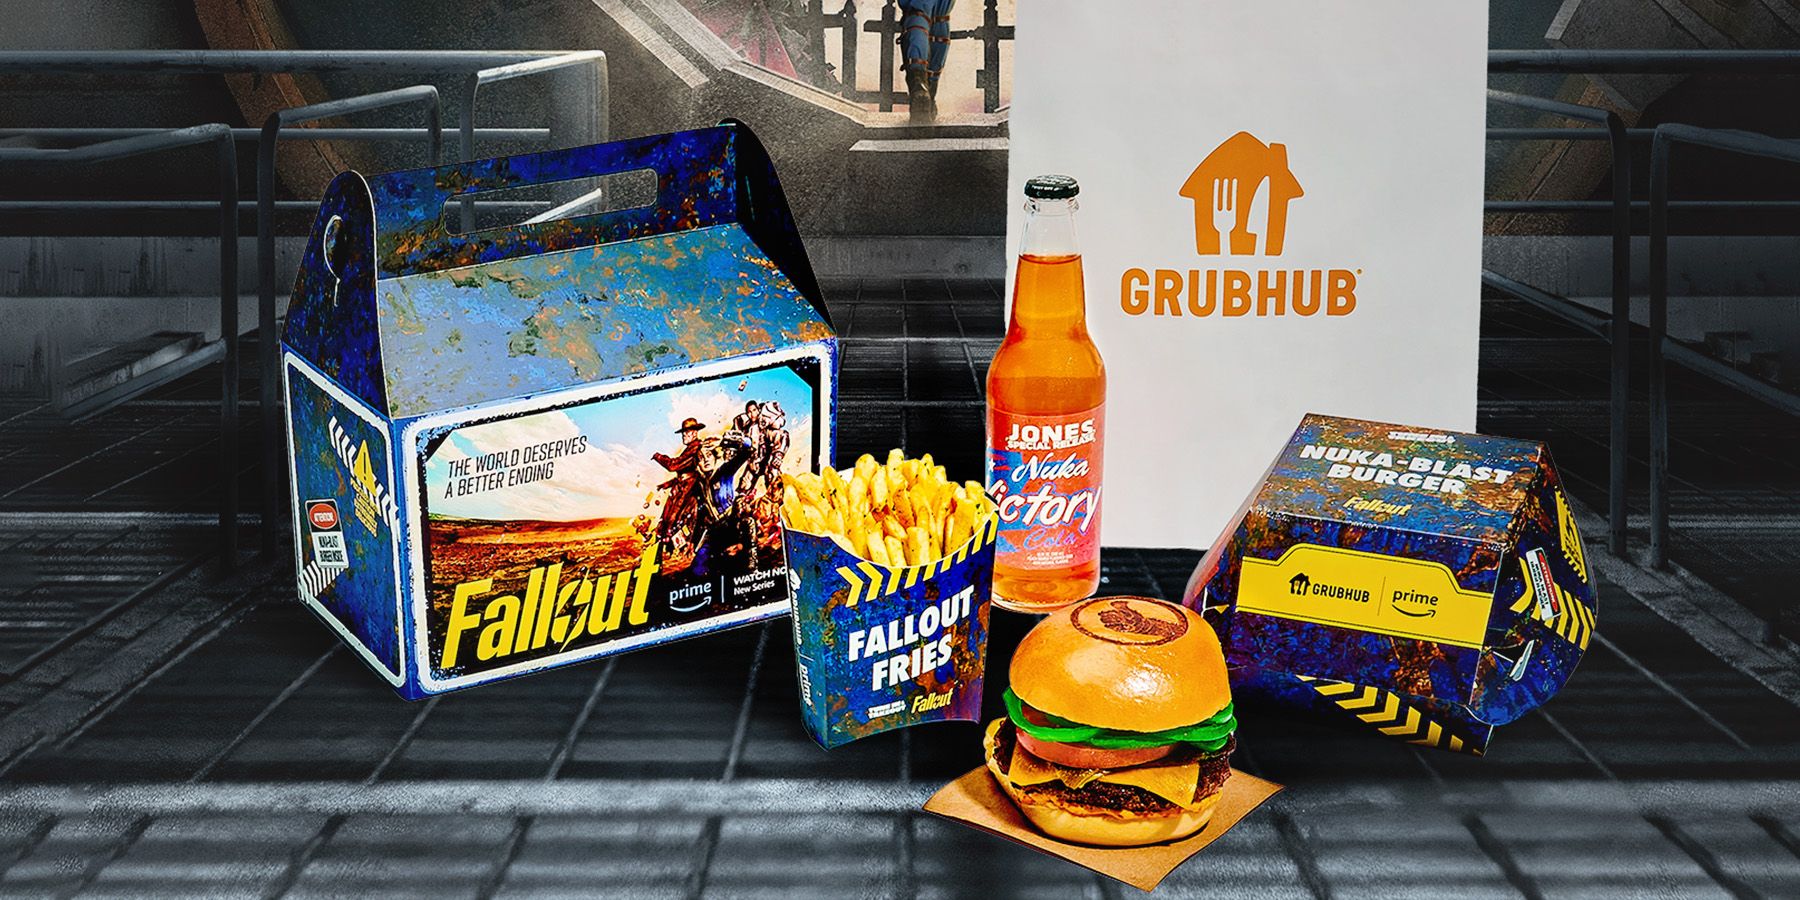 Grubhub Nuka-Blast Burger Meal Fallout Amazon Prime TV show promo